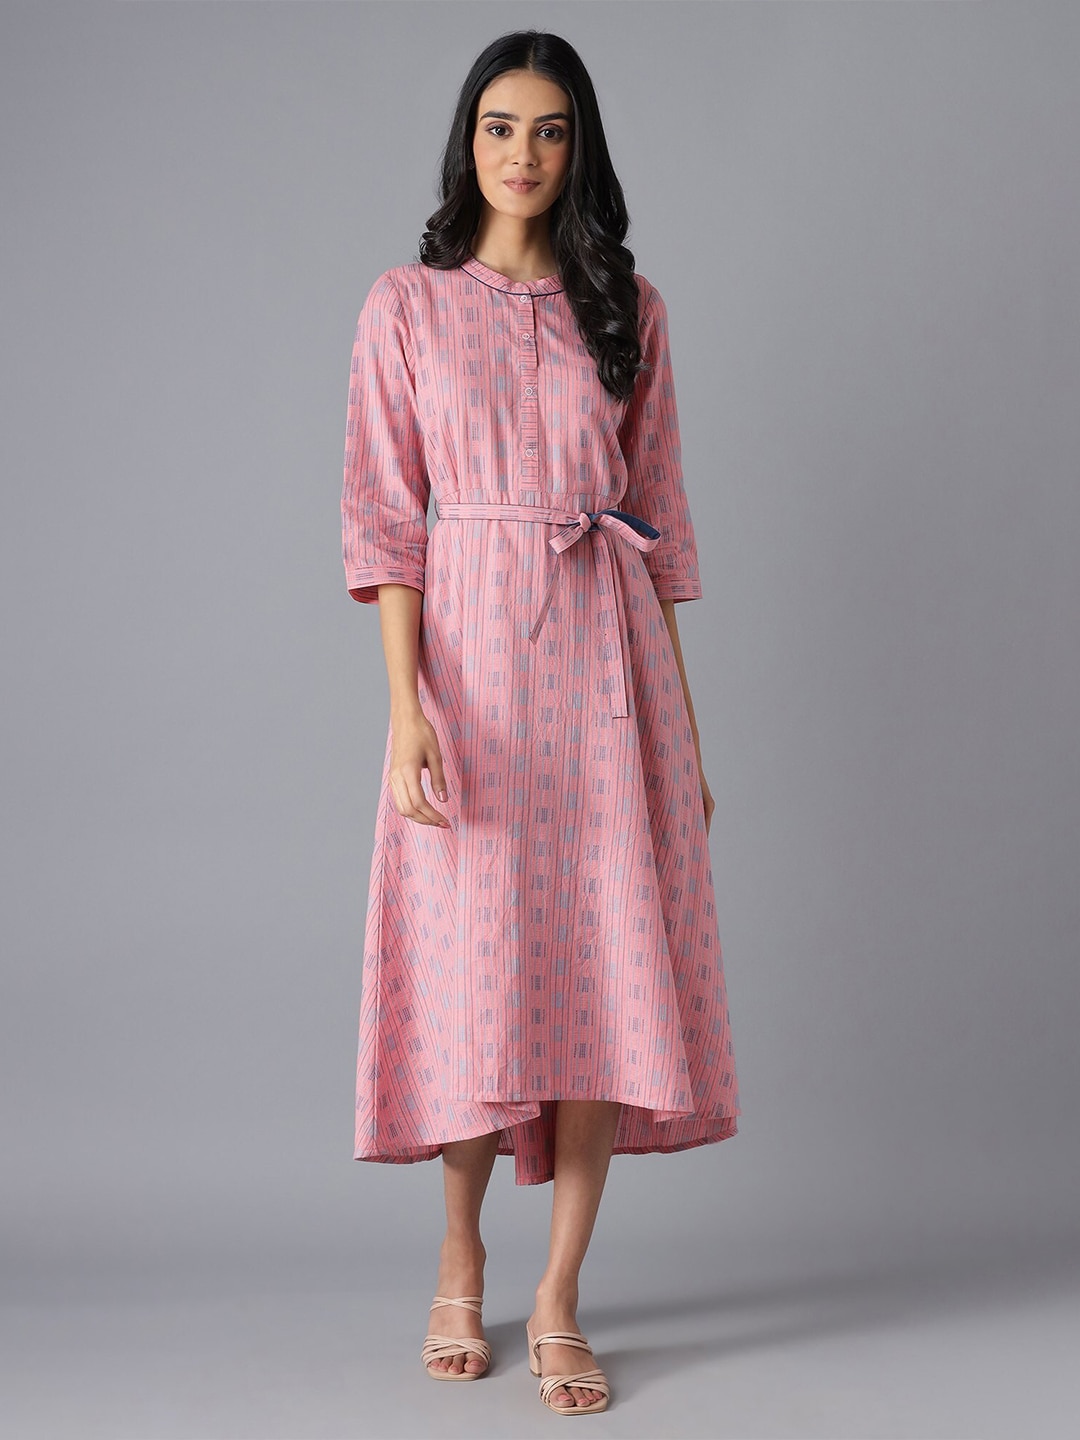 AURELIA Pink & Blue A-Line Cotton Midi Dress Price in India